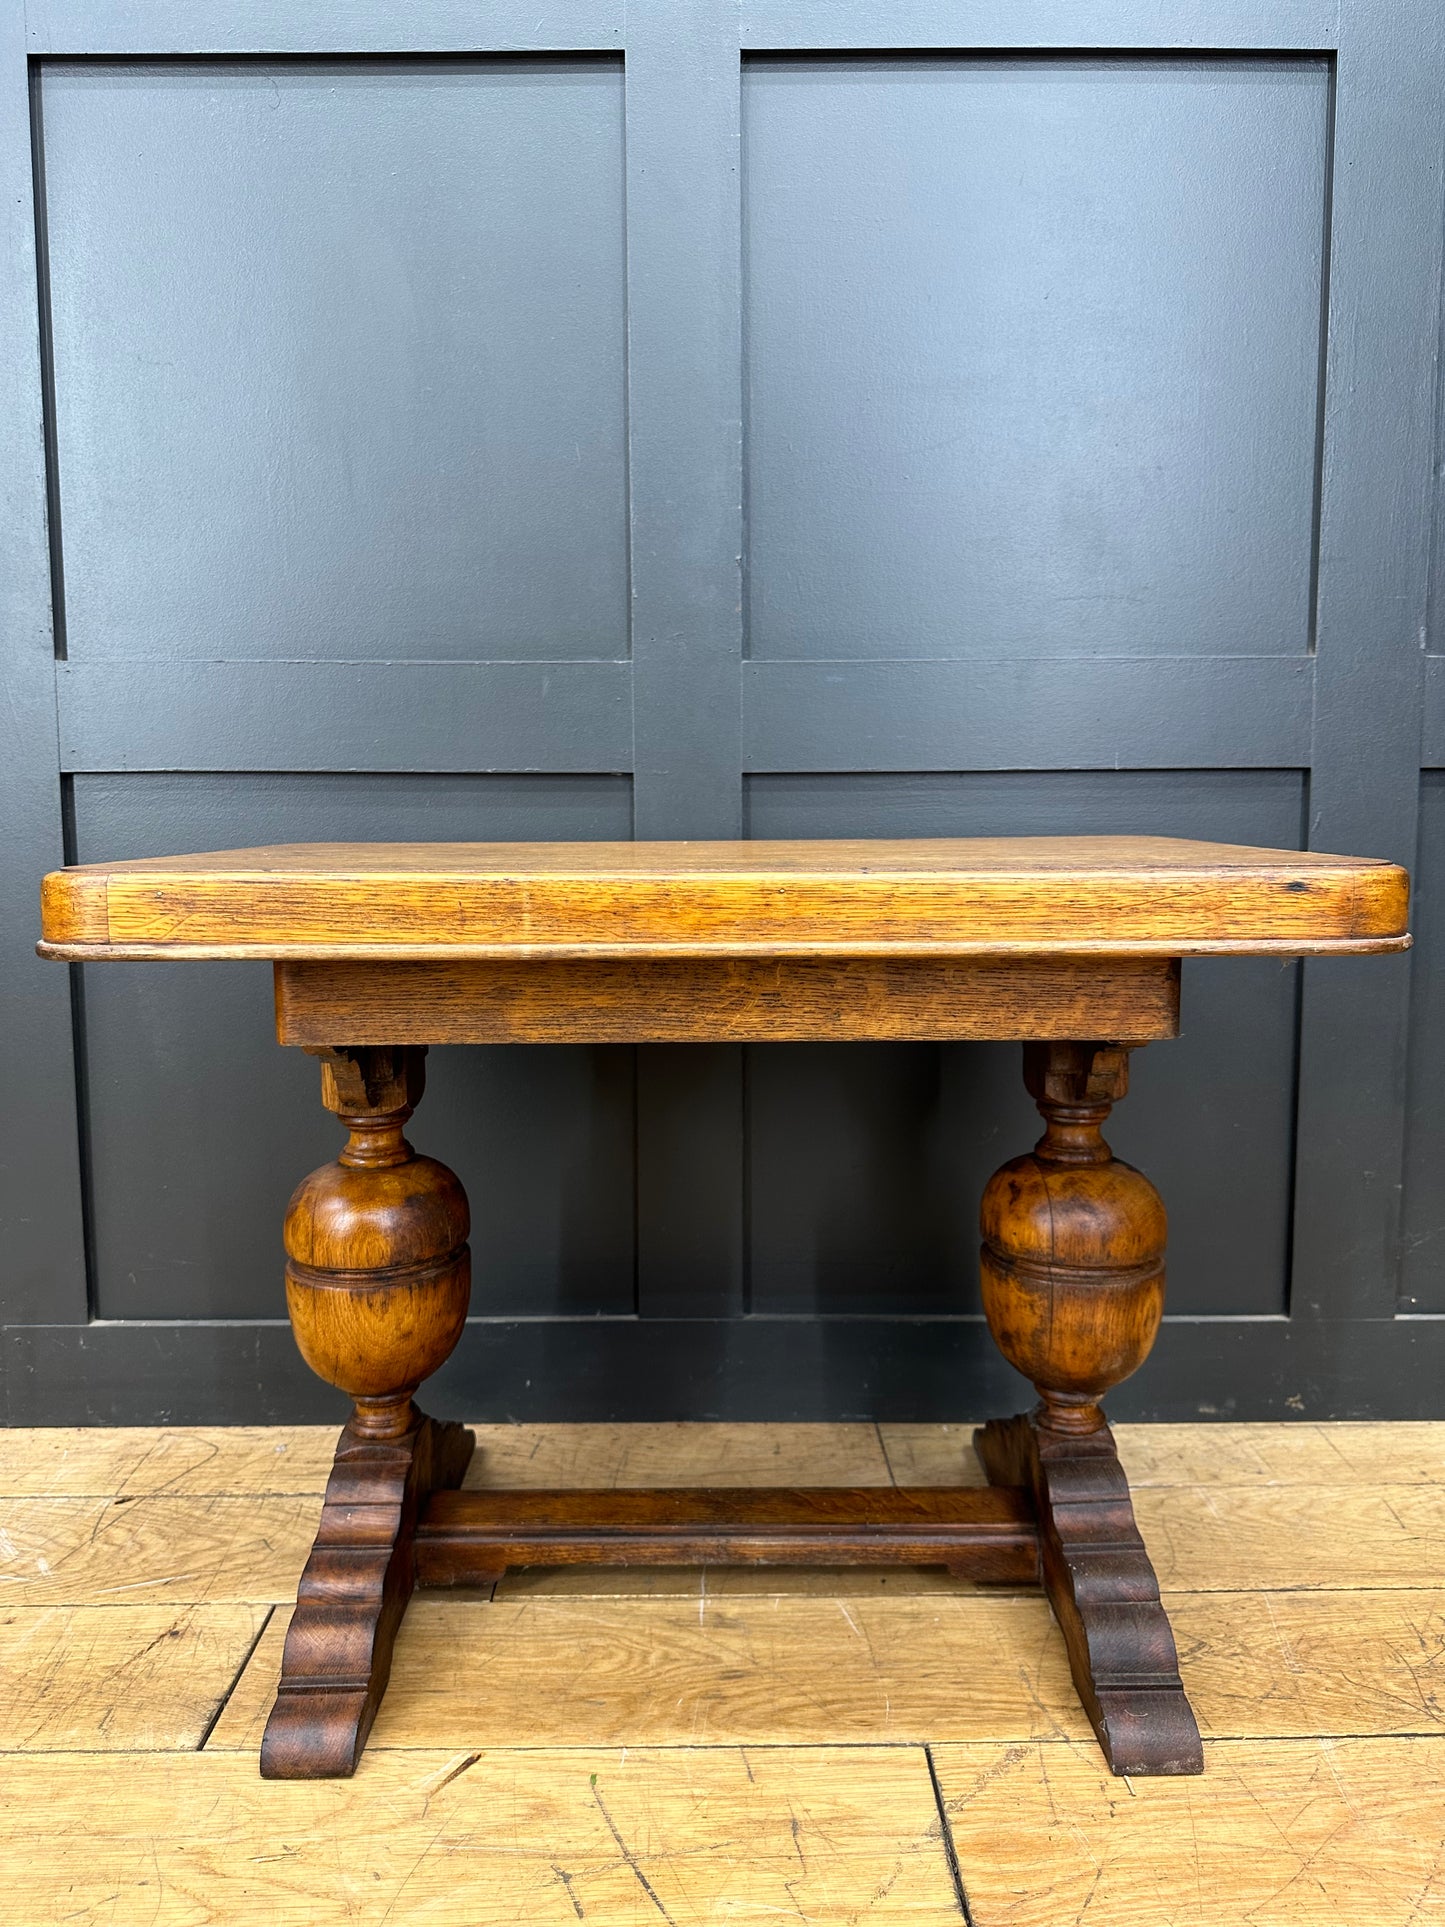 Vintage Oak Coffee Table / Low Side Table / Rustic Furniture